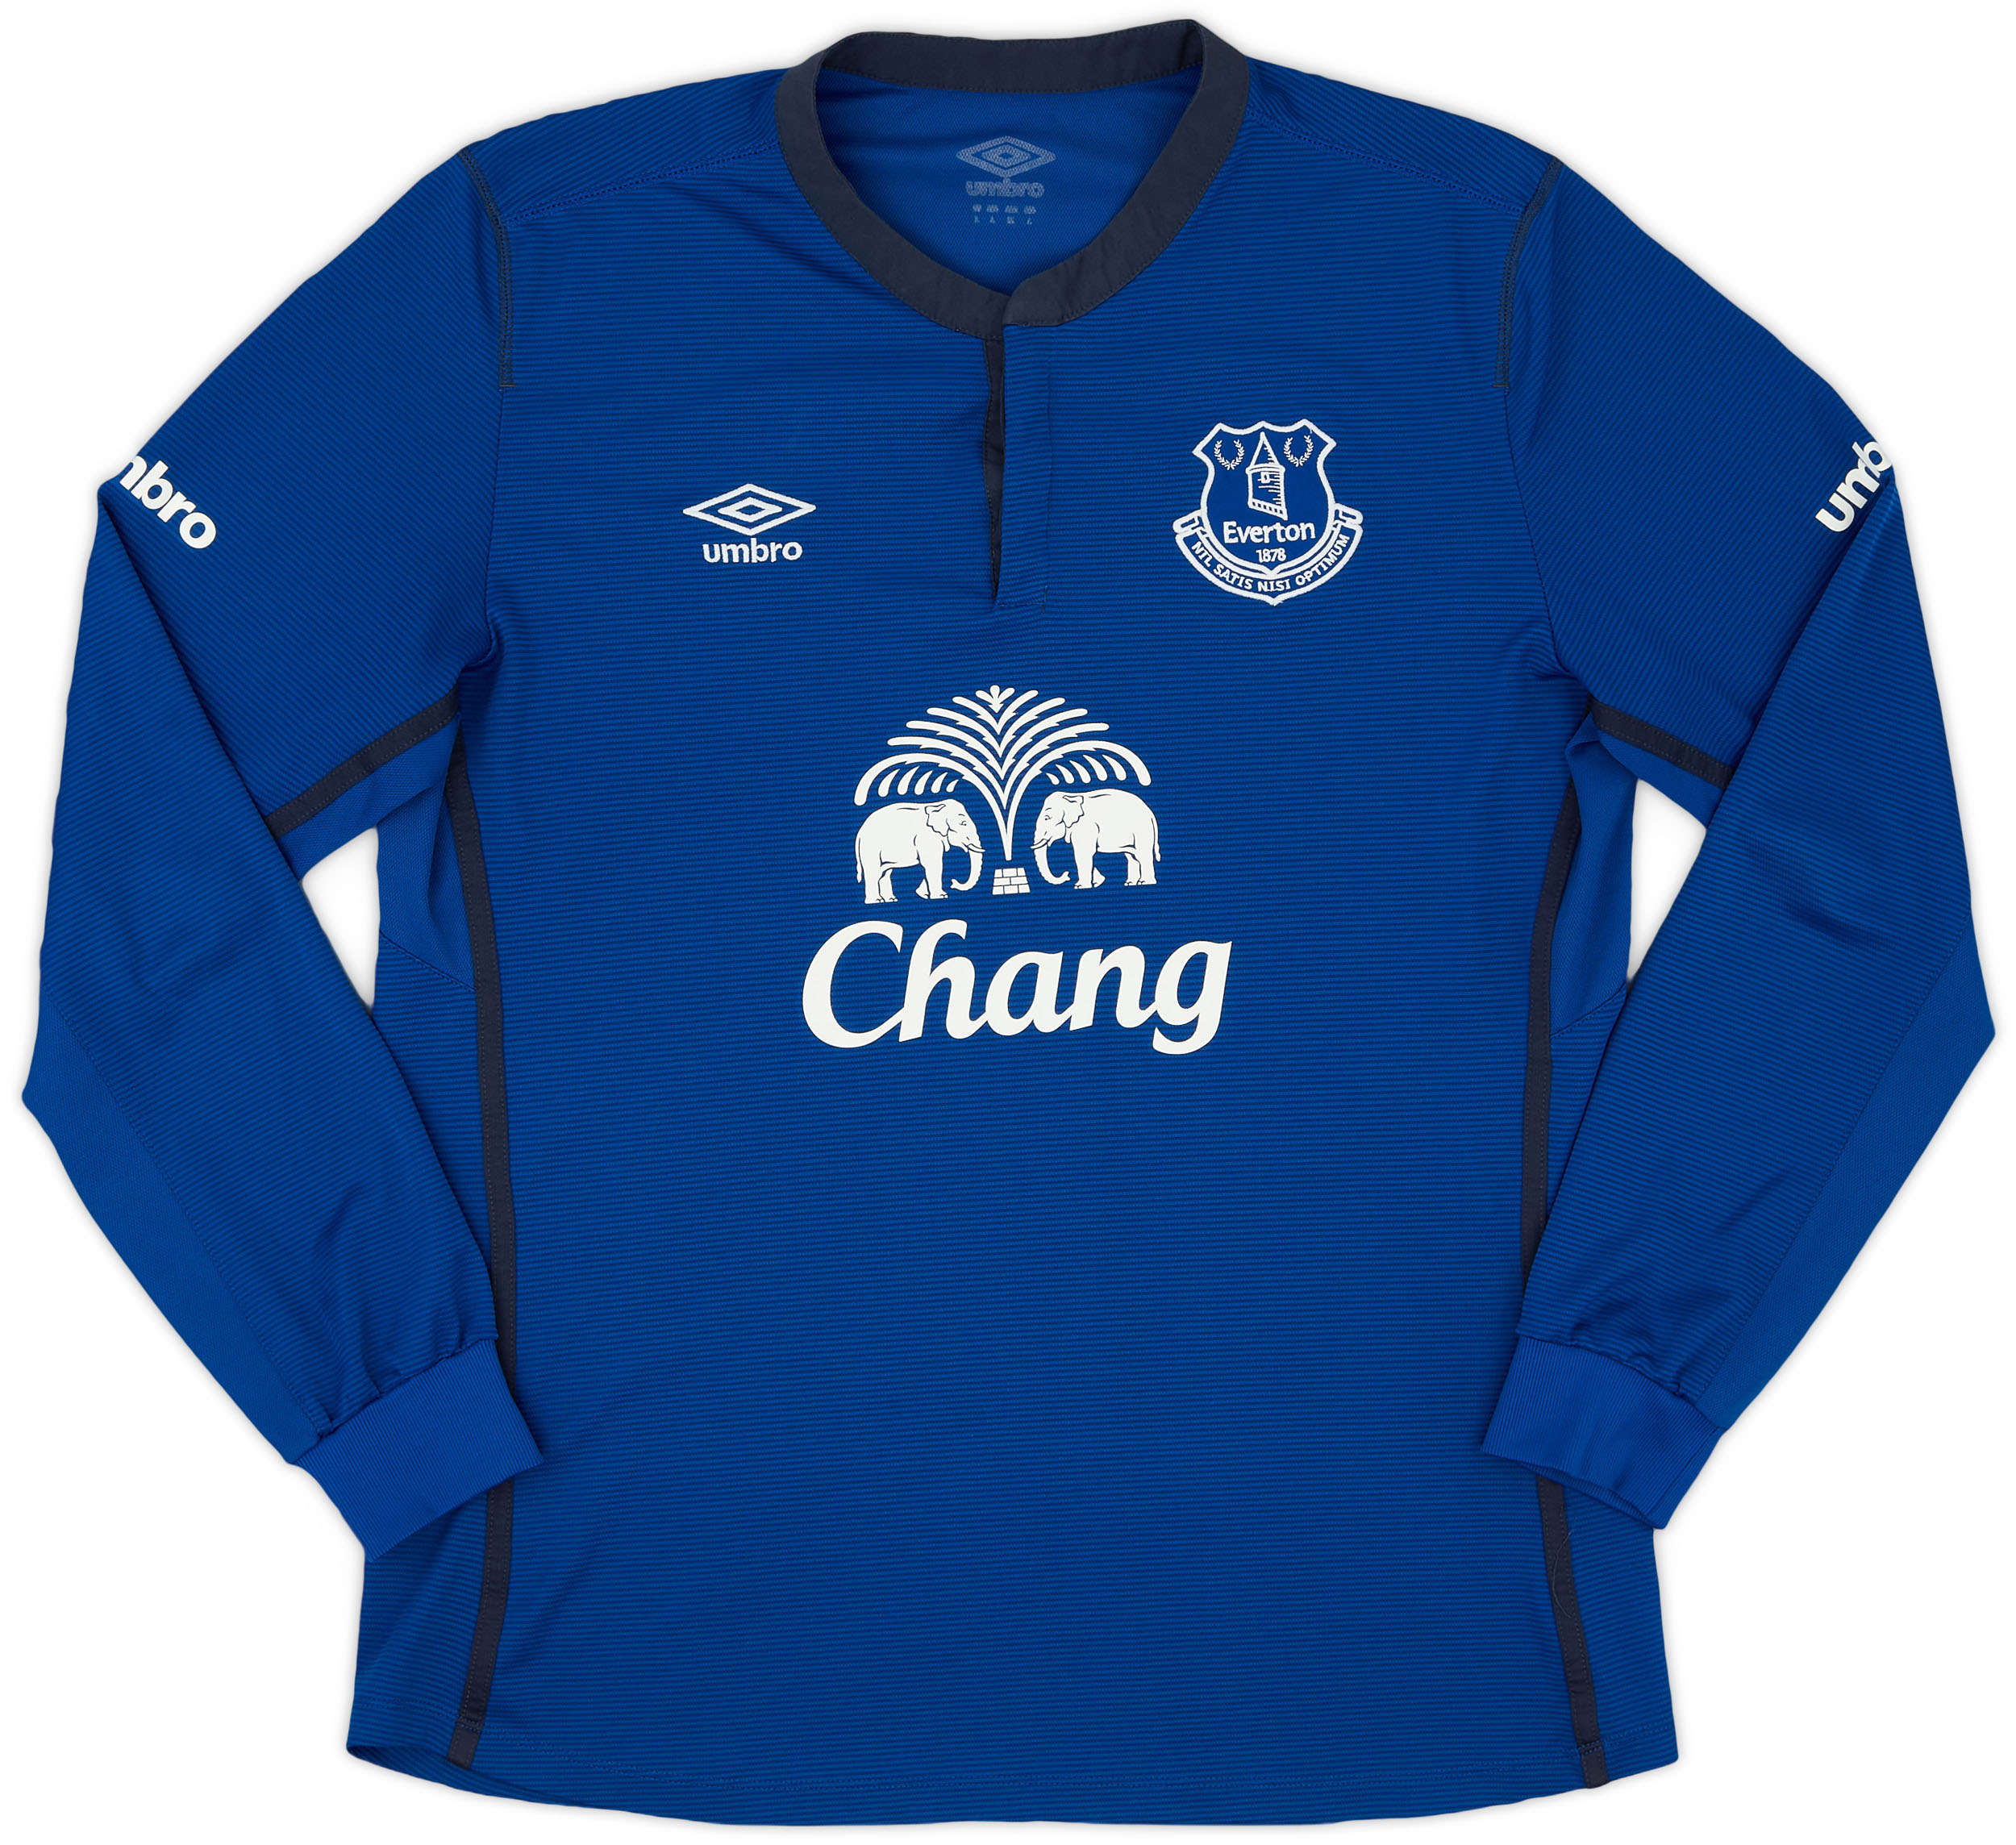 2014-15 Everton Home Shirt - 8/10 - ()